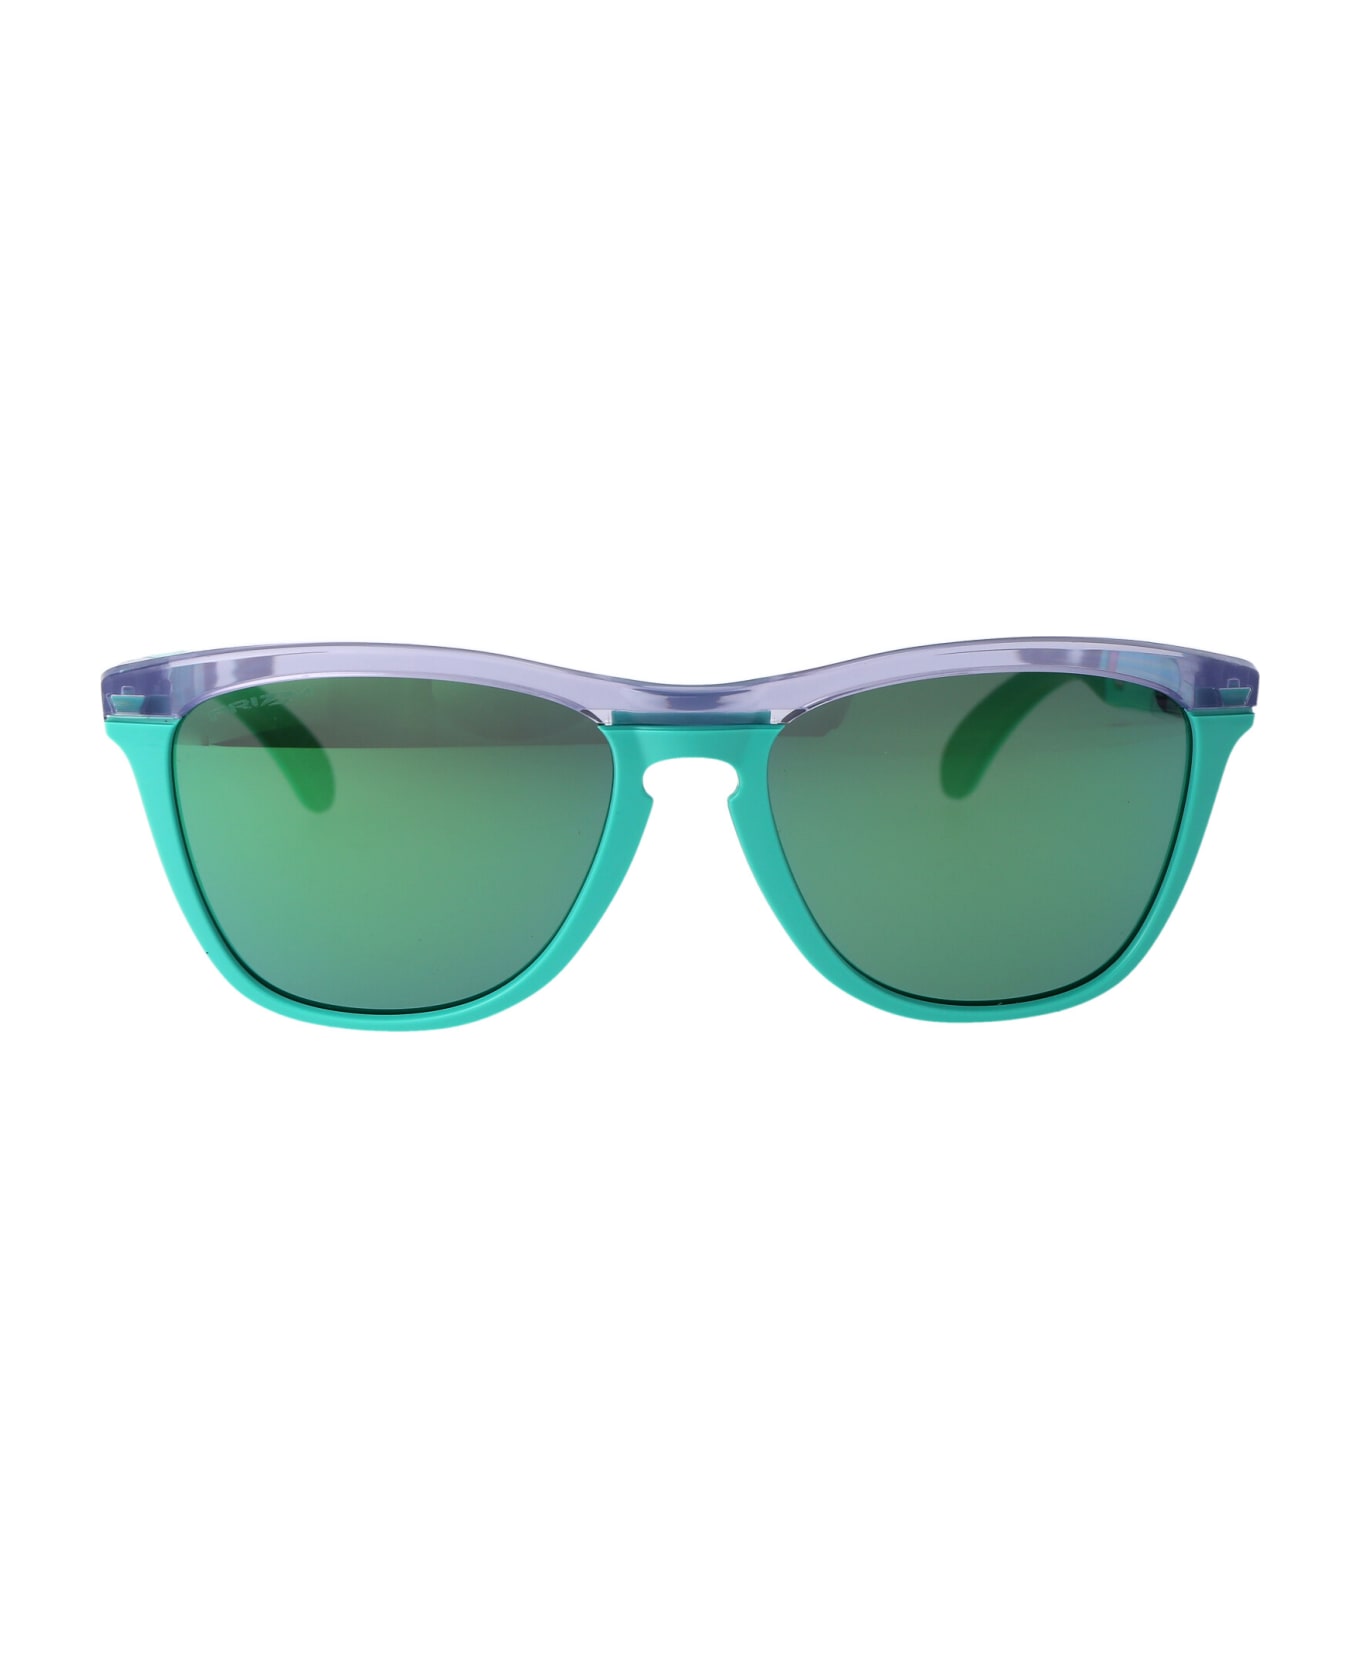 Oakley Frogskins Range Sunglasses - Turquoise サングラス